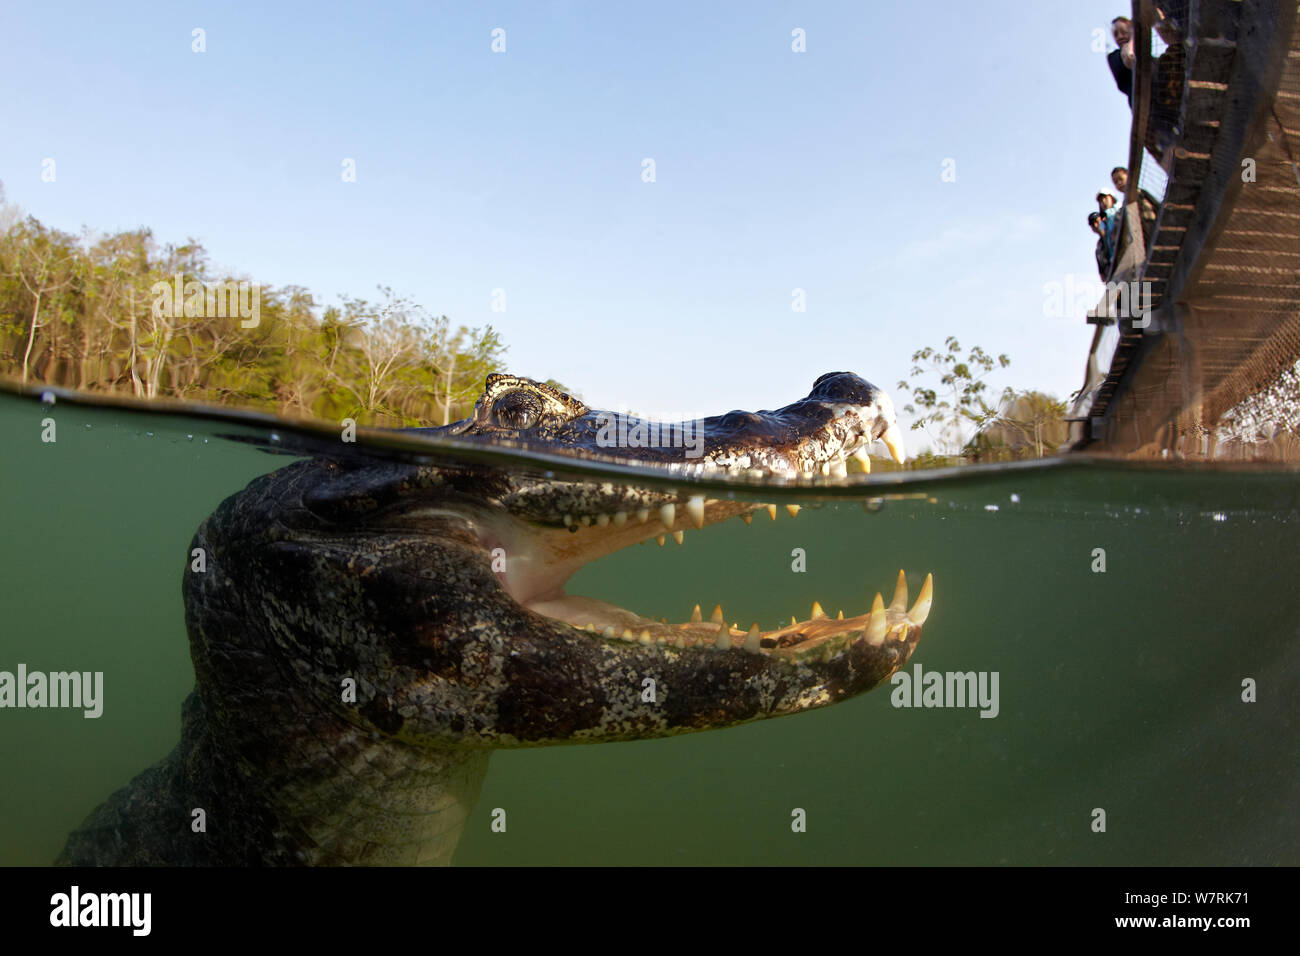 Spectacled caiman (Caiman crocodilus) watched by tourist on bridge, Rio BaiÂa Bonita, Bonito, Mato Grosso do Sul, Brazil Stock Photo